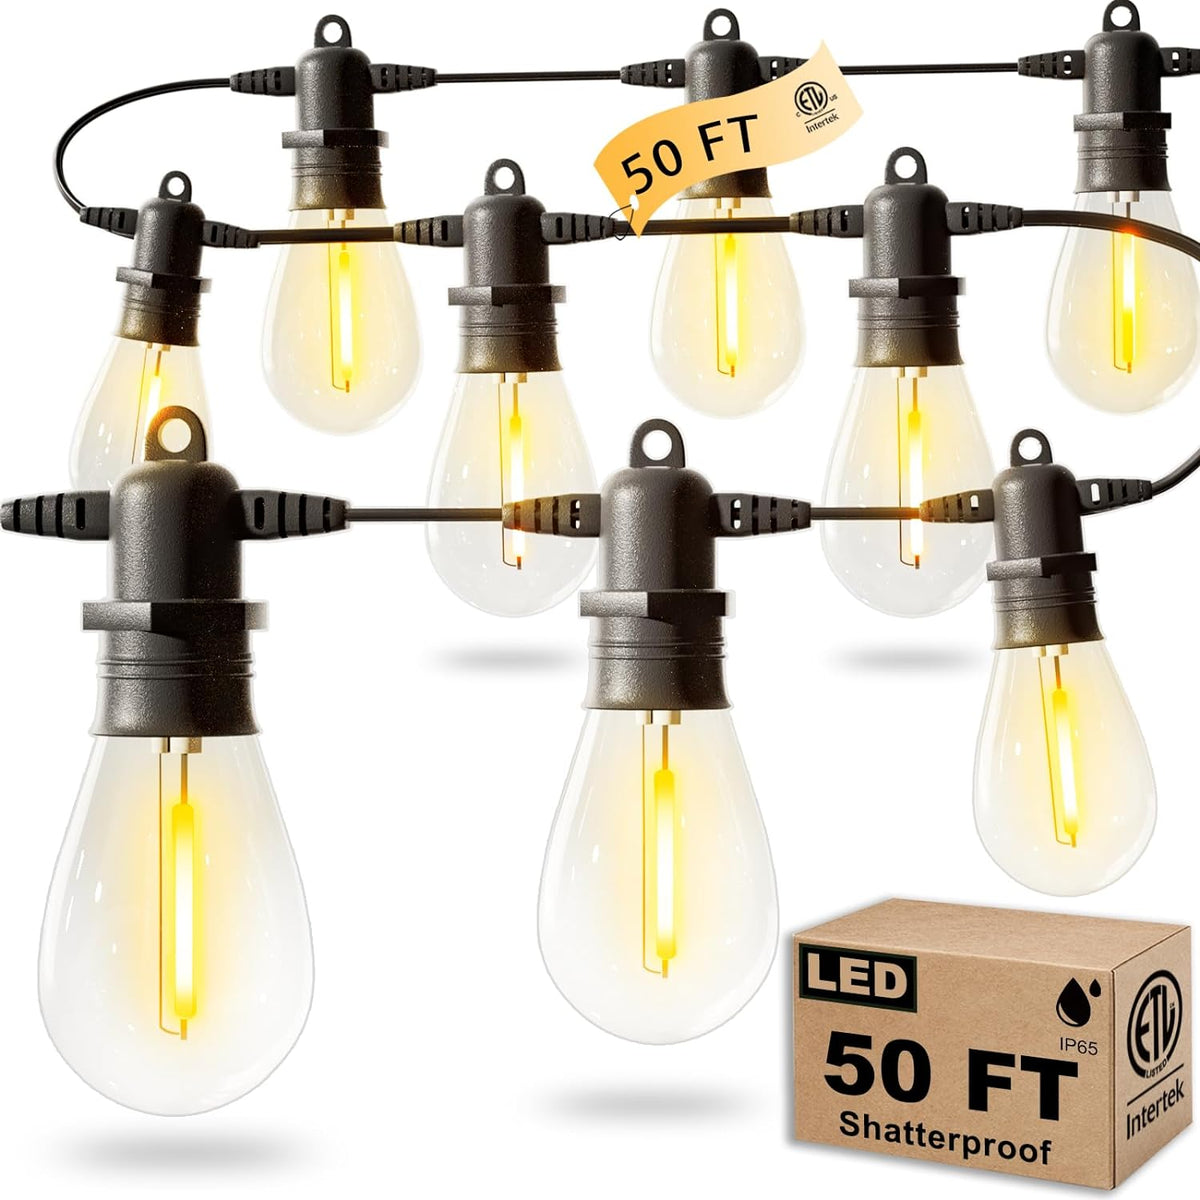 LED Outdoor Gazebo String Lights Shatterproof & IP65 Waterproof Bulbs